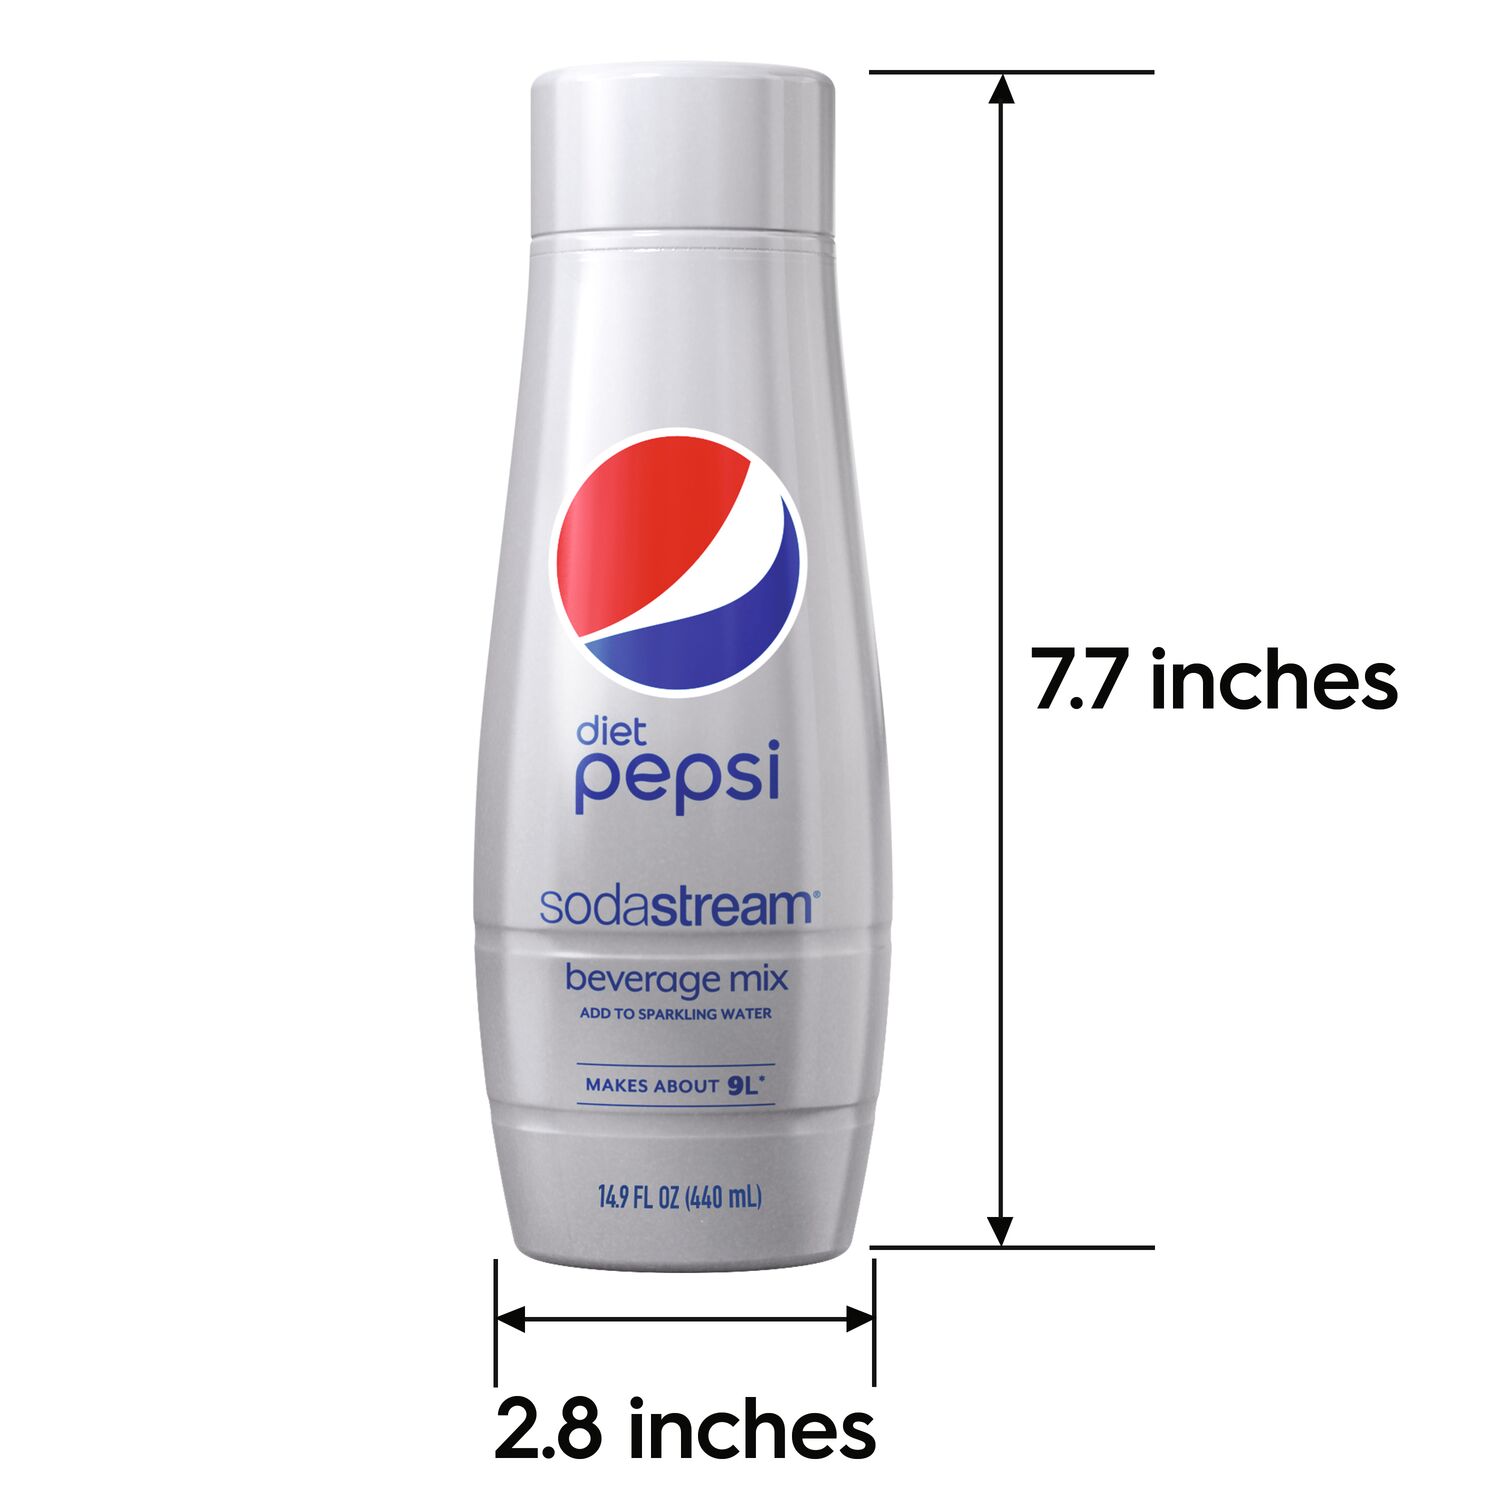 SodaStream Diet Pepsi Beverage Mix, 440ml - Best Buy